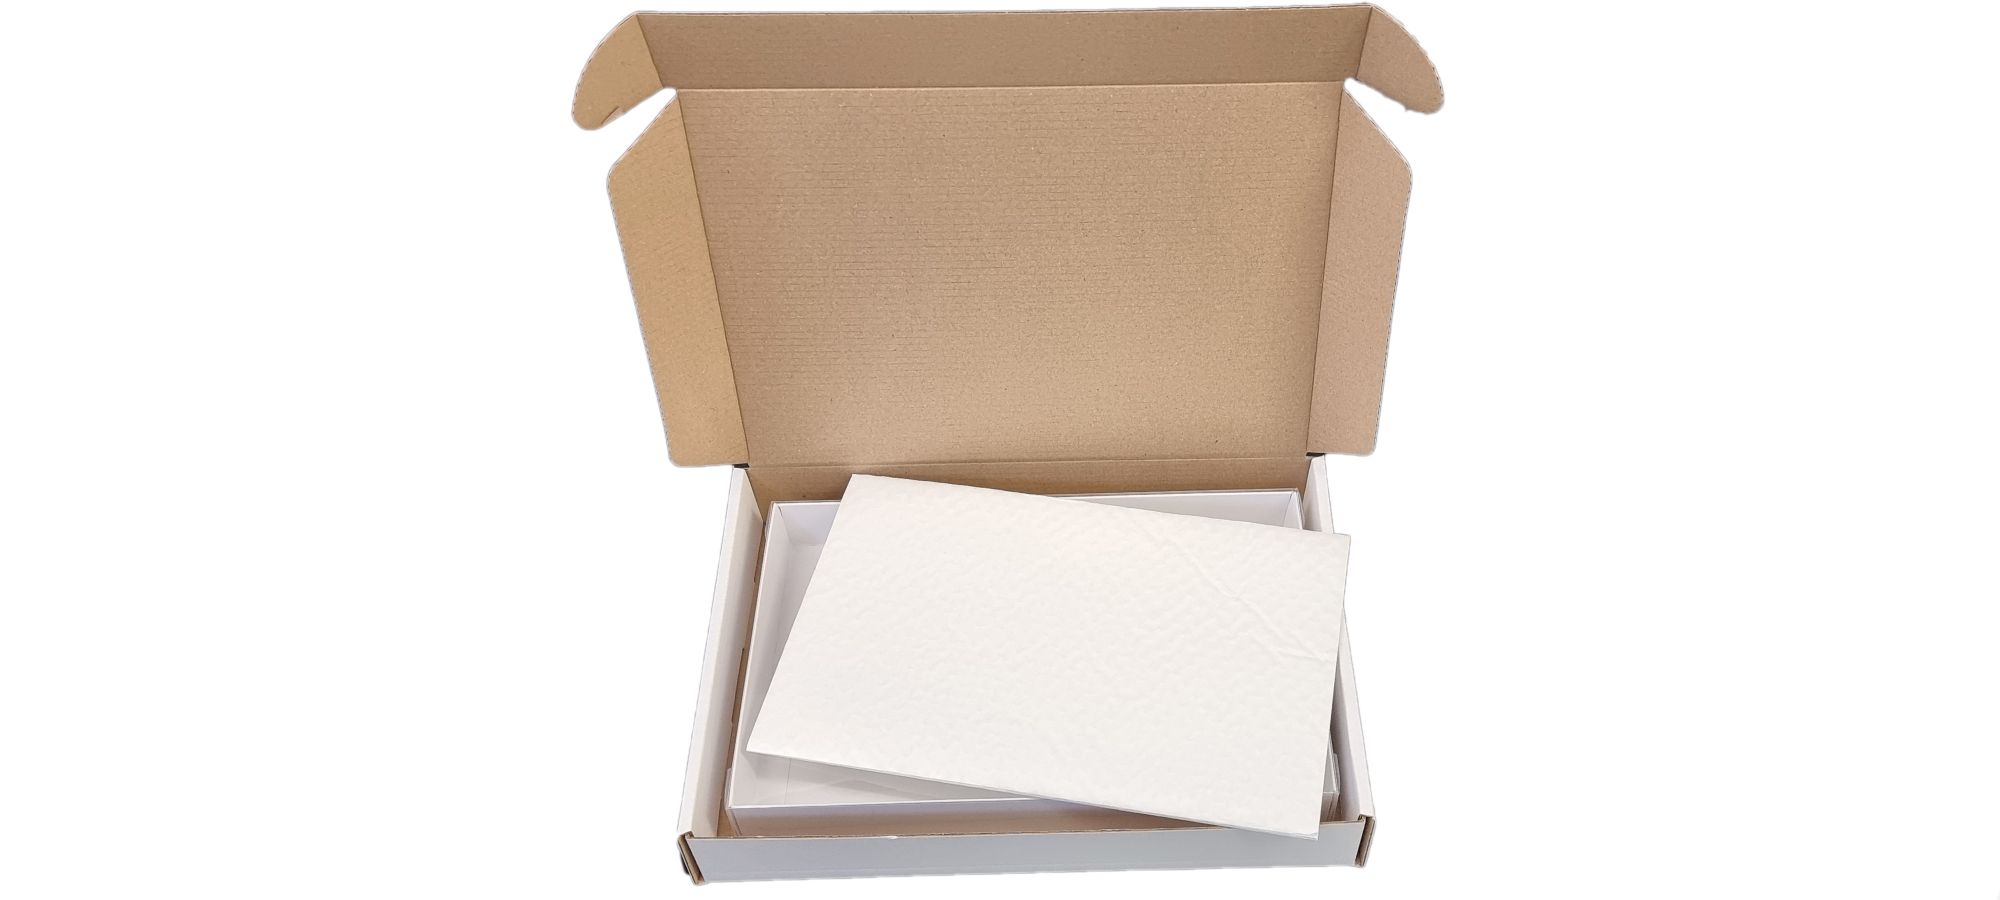 White Hamper Postal Packaging - Elite Packaging Company Ltd